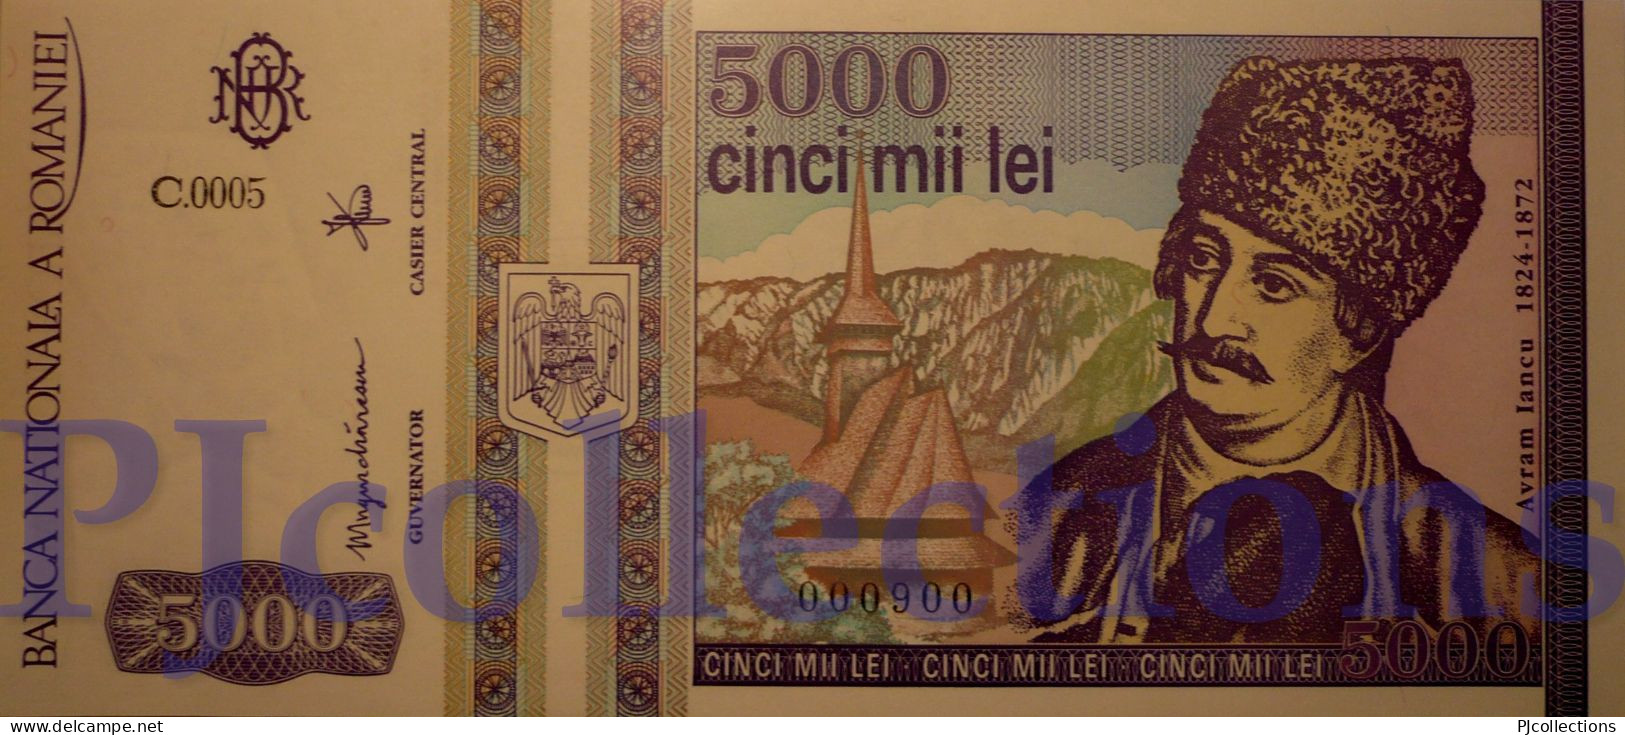 ROMANIA 5000 LEI 1993 PICK 104a UNC LOW & GOOD SERIAL NUMBER "000900" - Roemenië